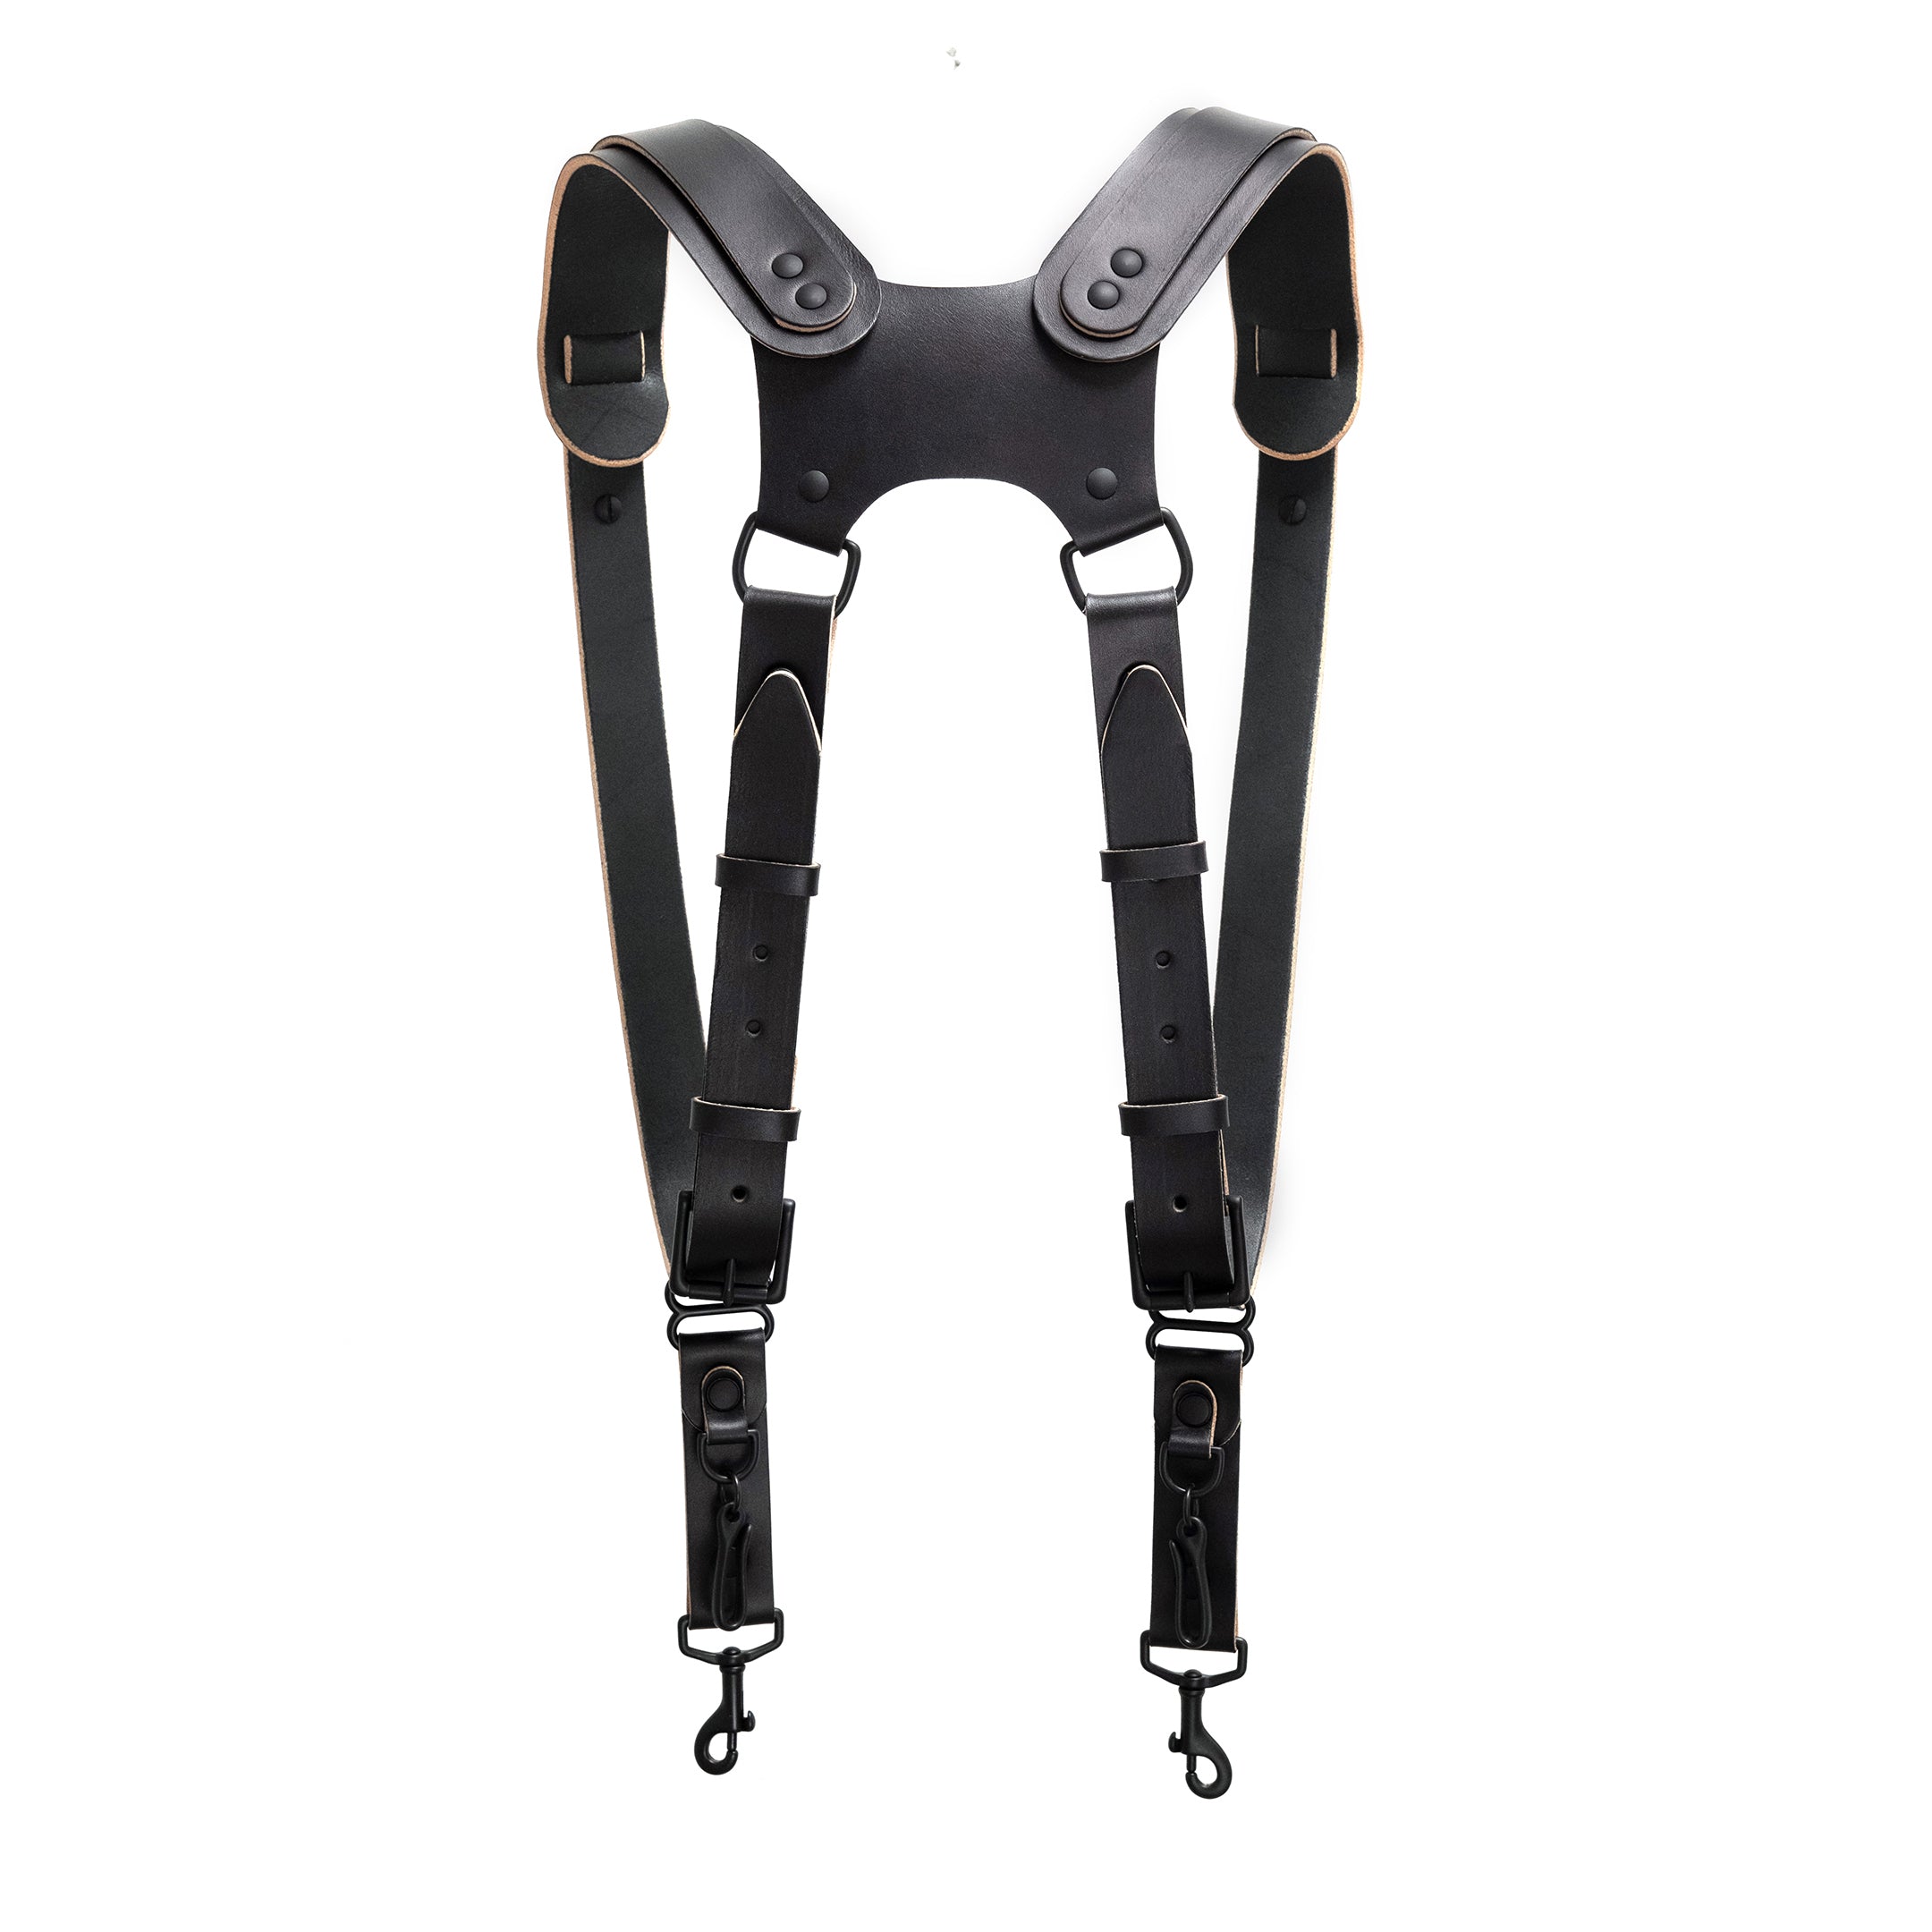 Fab' F22 harness - Black leather - Size XL